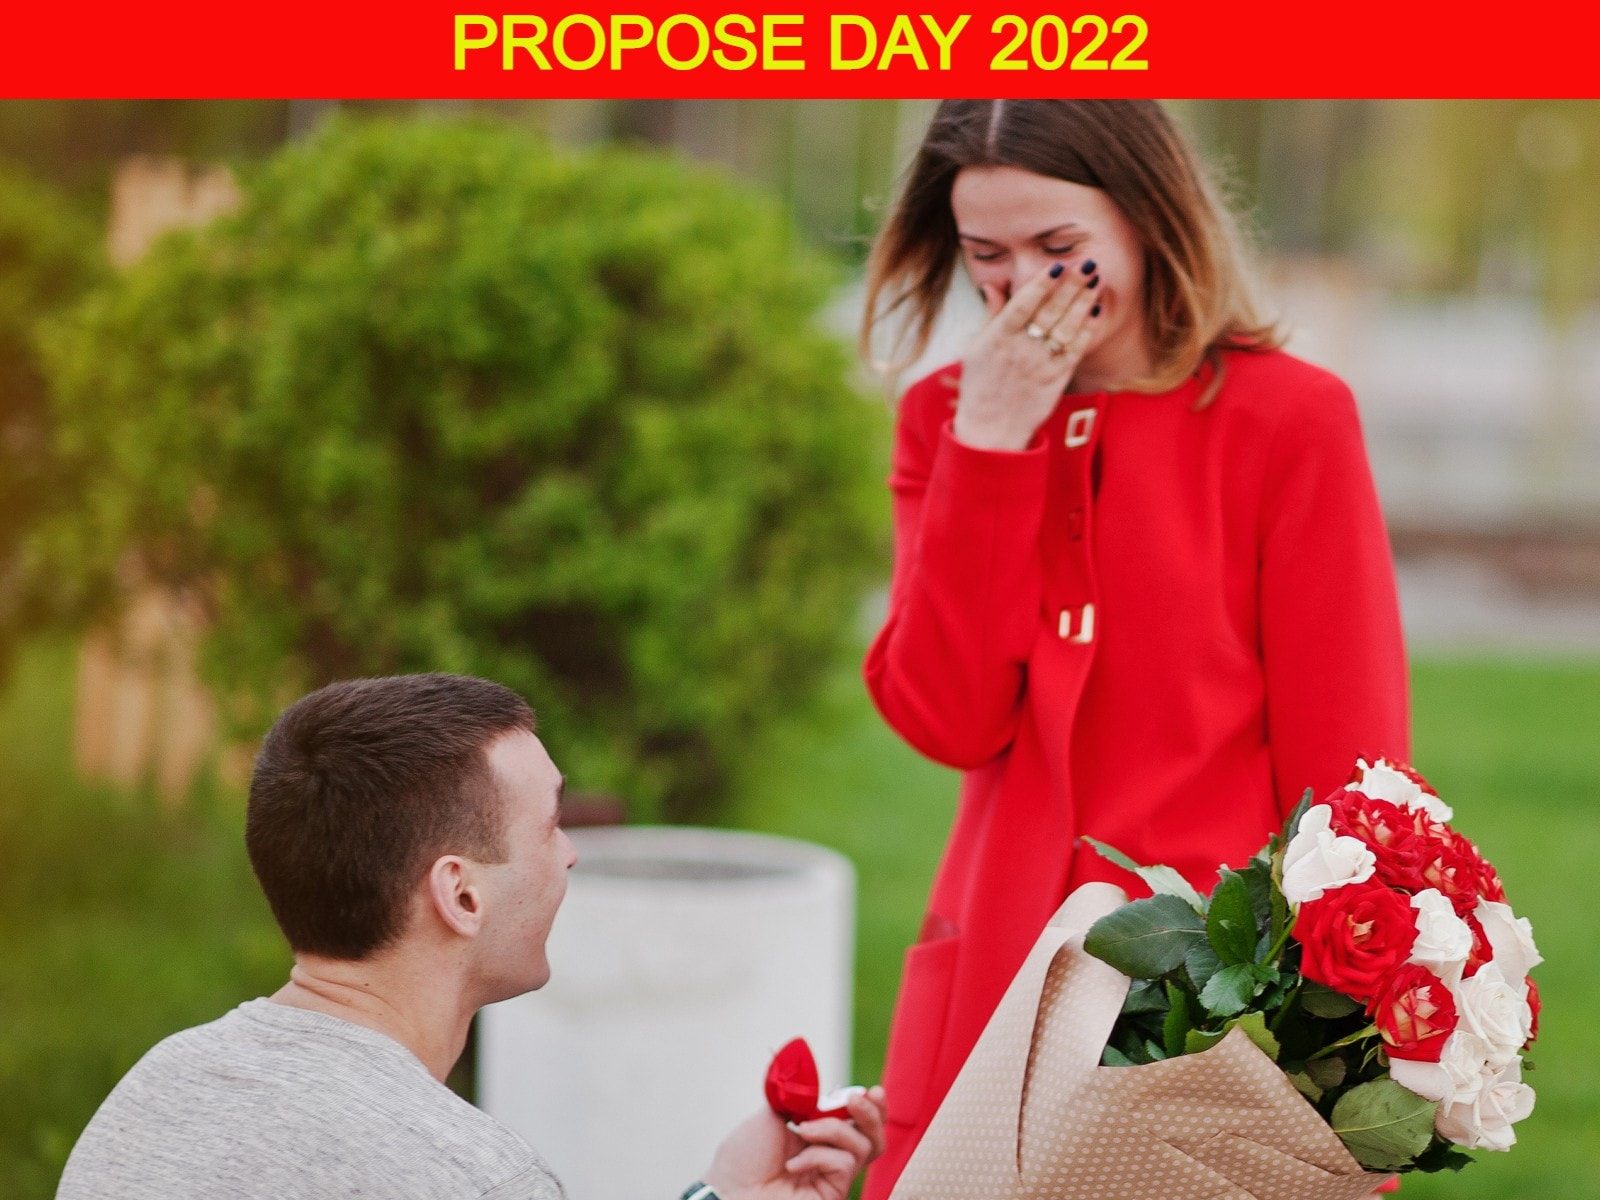 Propose Day 2022 Wishes: ਪ੍ਰਪੋਜ਼ ਡੇਅ `ਤੇ ਇਨ੍ਹਾਂ ਖ਼ਾਸ Messages ਨਾਲ ਕਹੋ ਆਪਣੇ ਦਿਲ ਦੀ ਗੱਲ